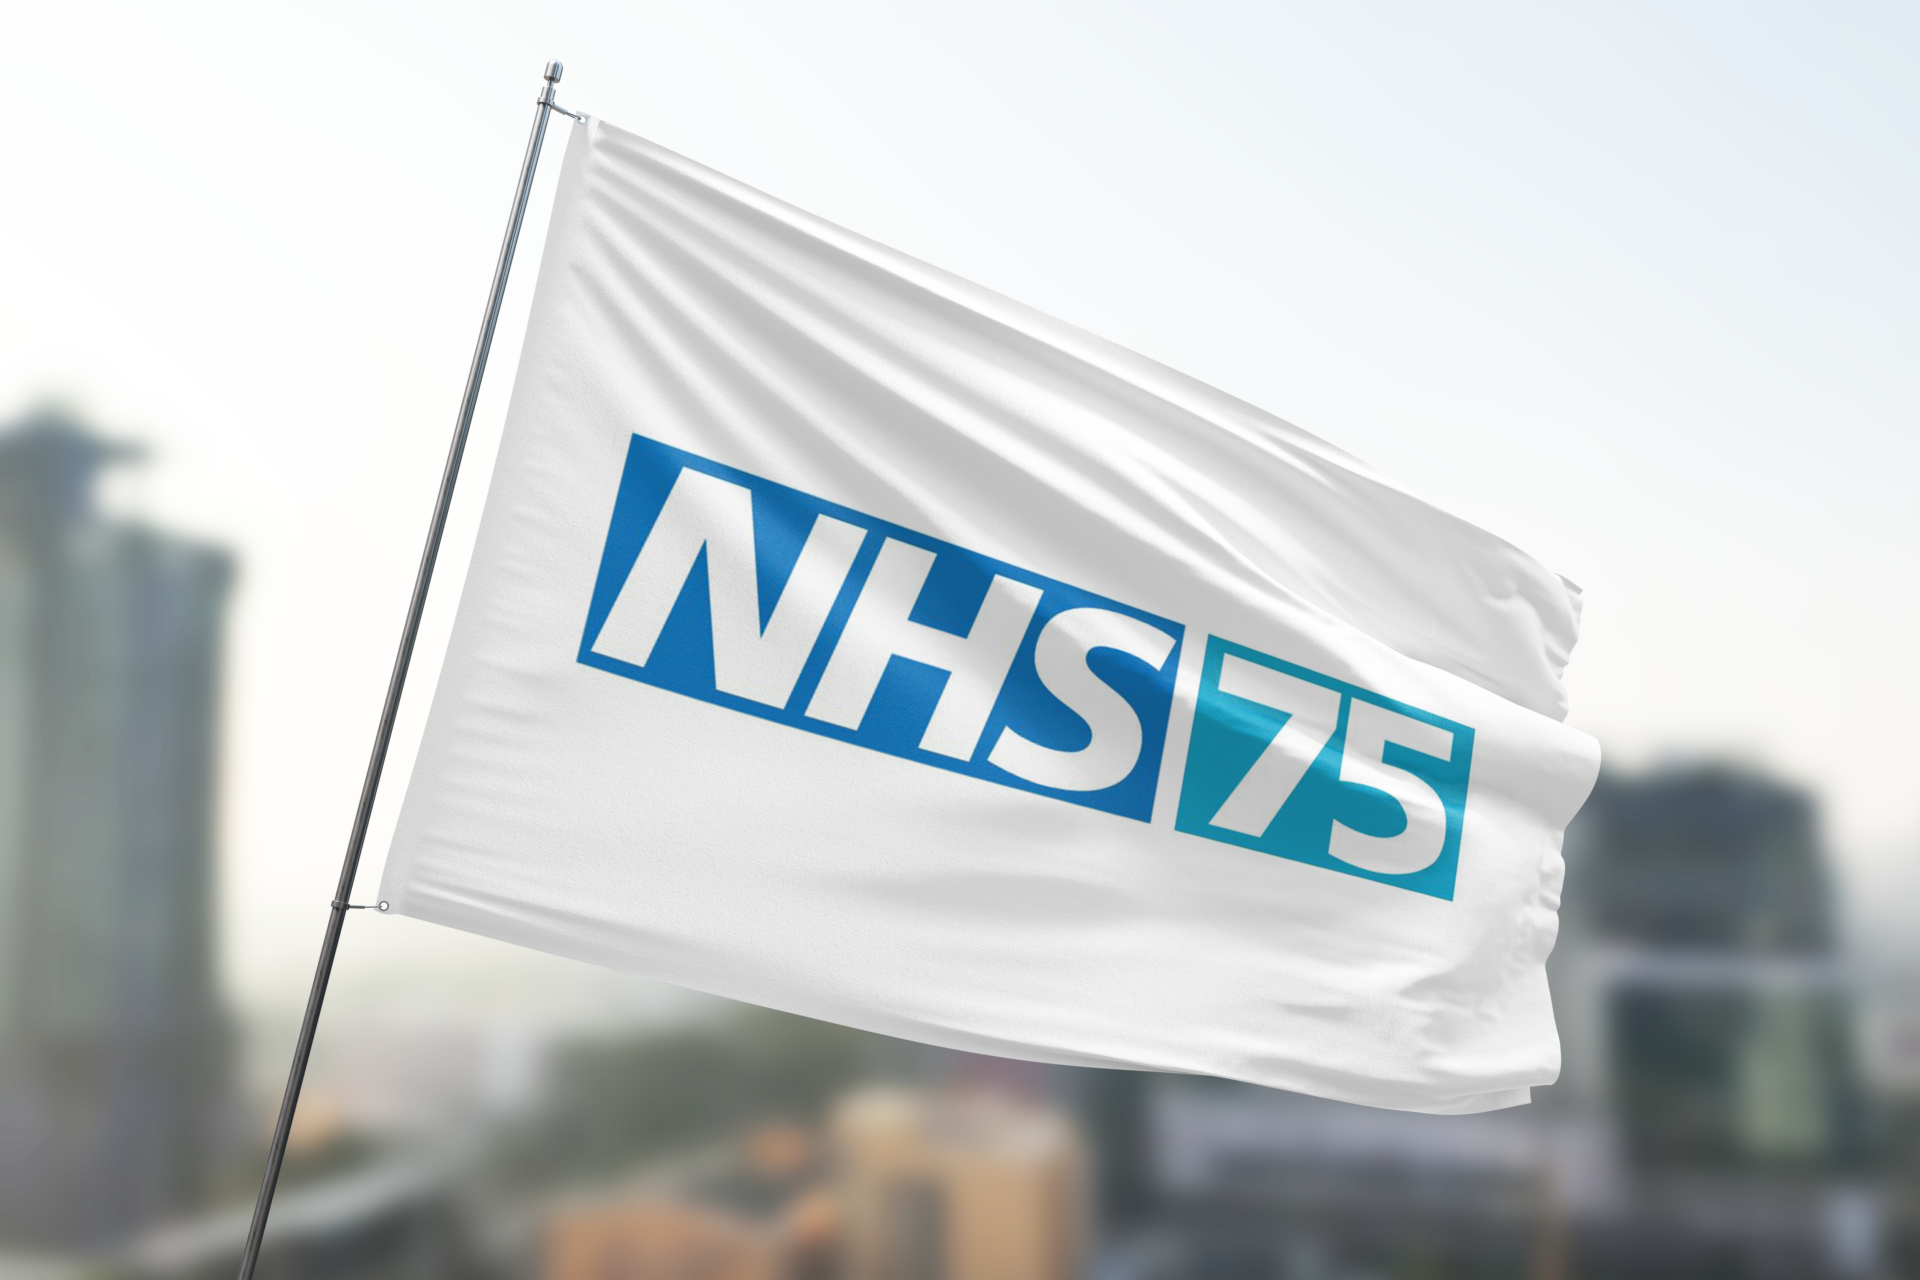 NHS 75 flag